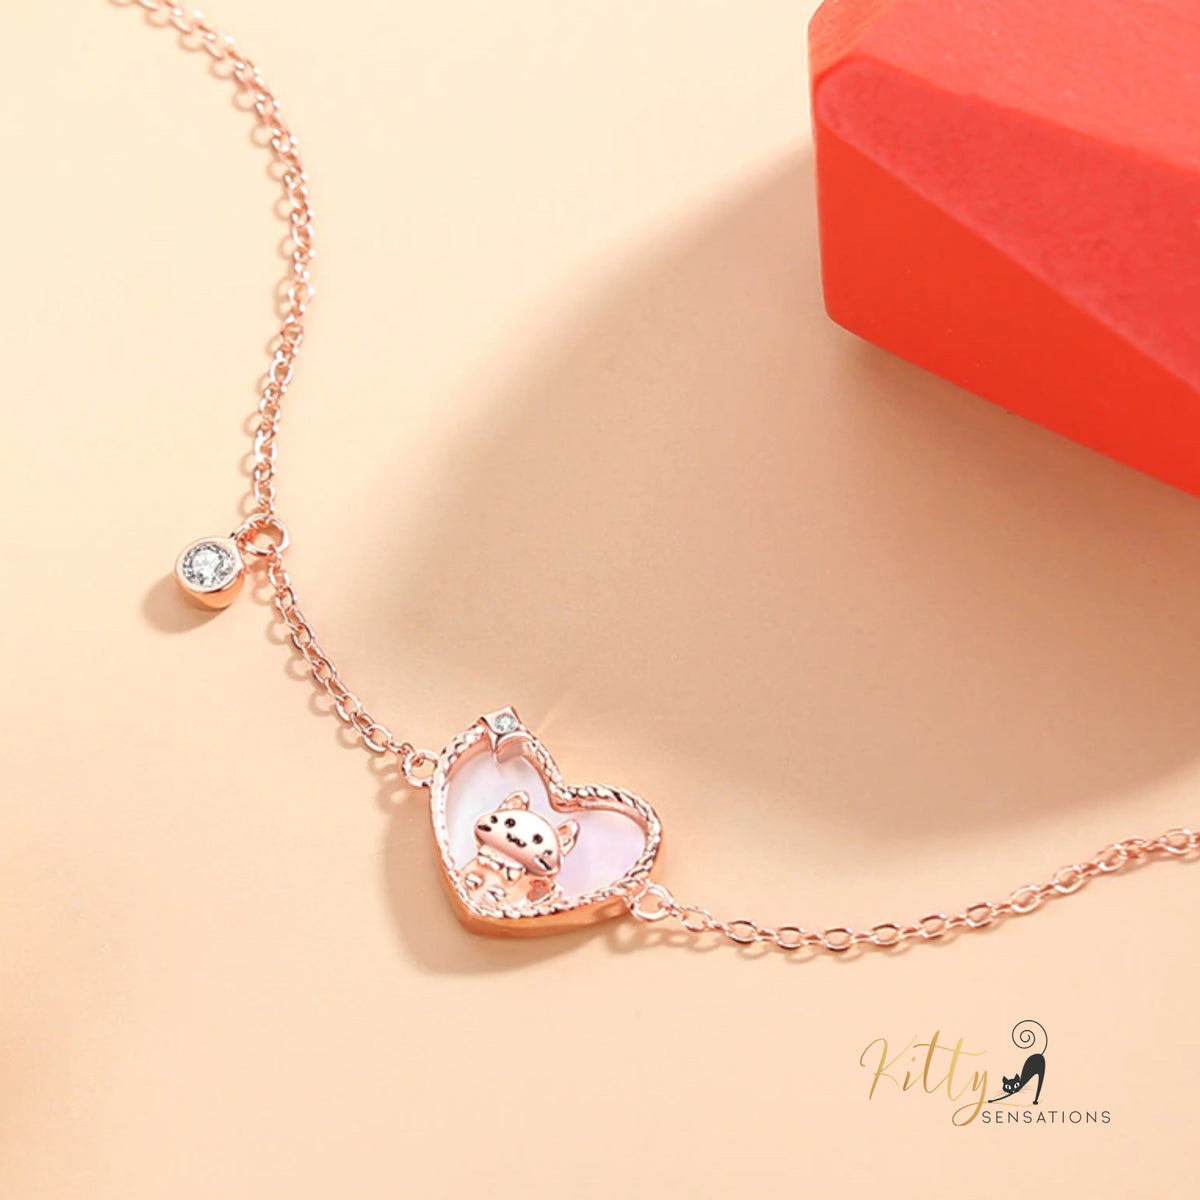 www.KittySensations.com: Raised Kitty in Heart Bracelet in Solid 925 Sterling Silver - Rose Gold Plated ($53.57): https://www.kittysensations.com/products/raised-kitty-in-heart-bracelet-in-solid-925-sterling-silver